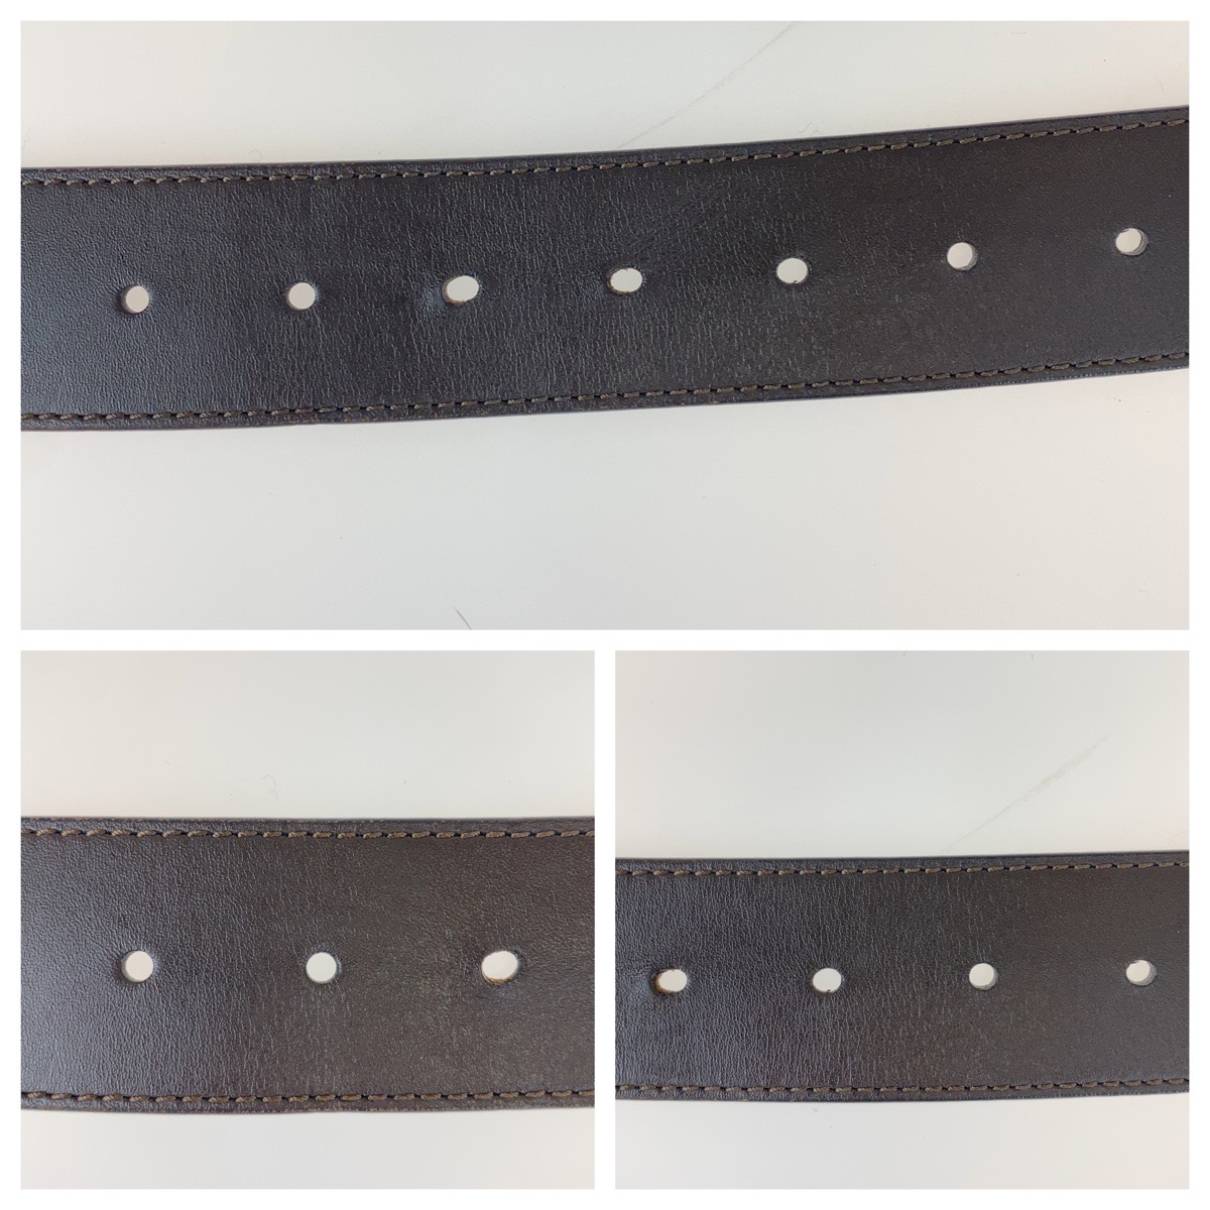 Louis Vuitton Leather Waist Belt - Brown Belts, Accessories - LOU760939